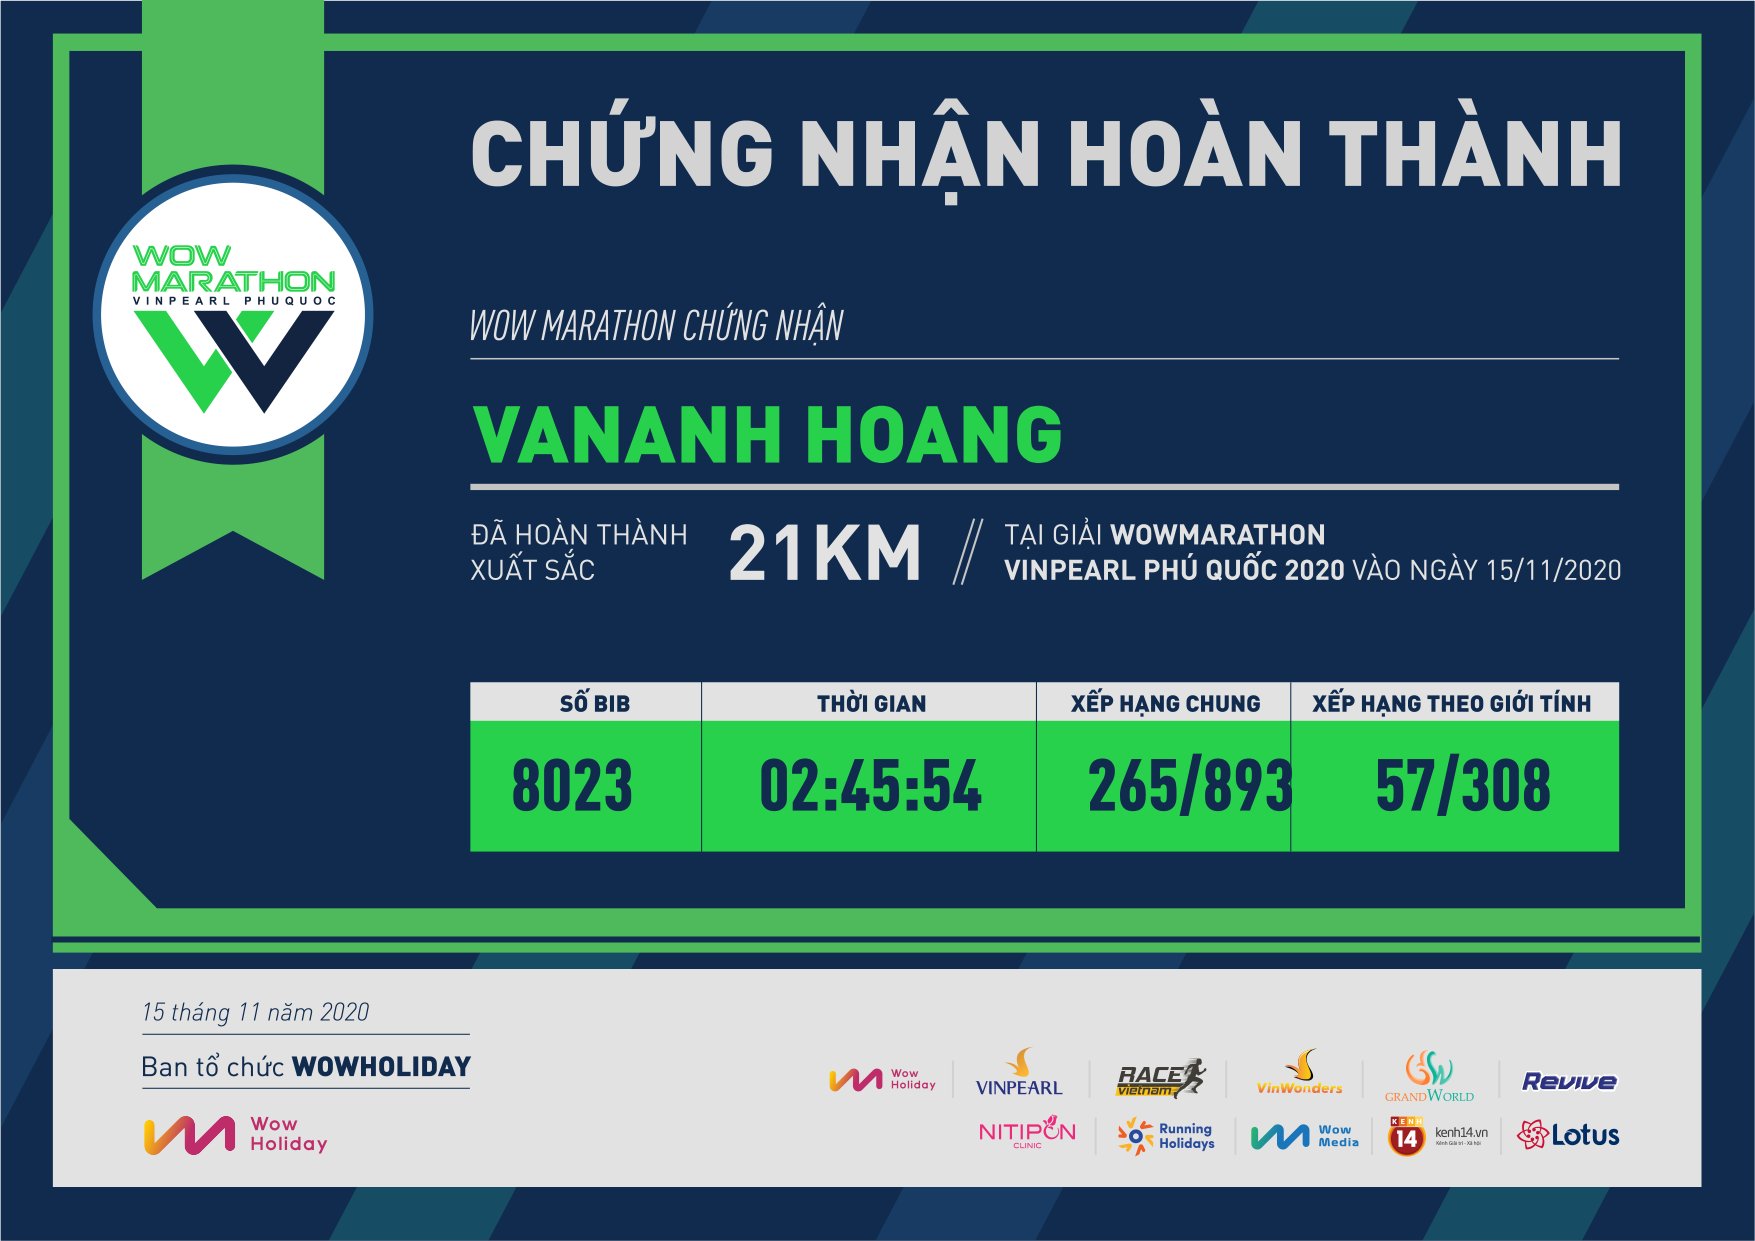 8023 - VanAnh Hoang